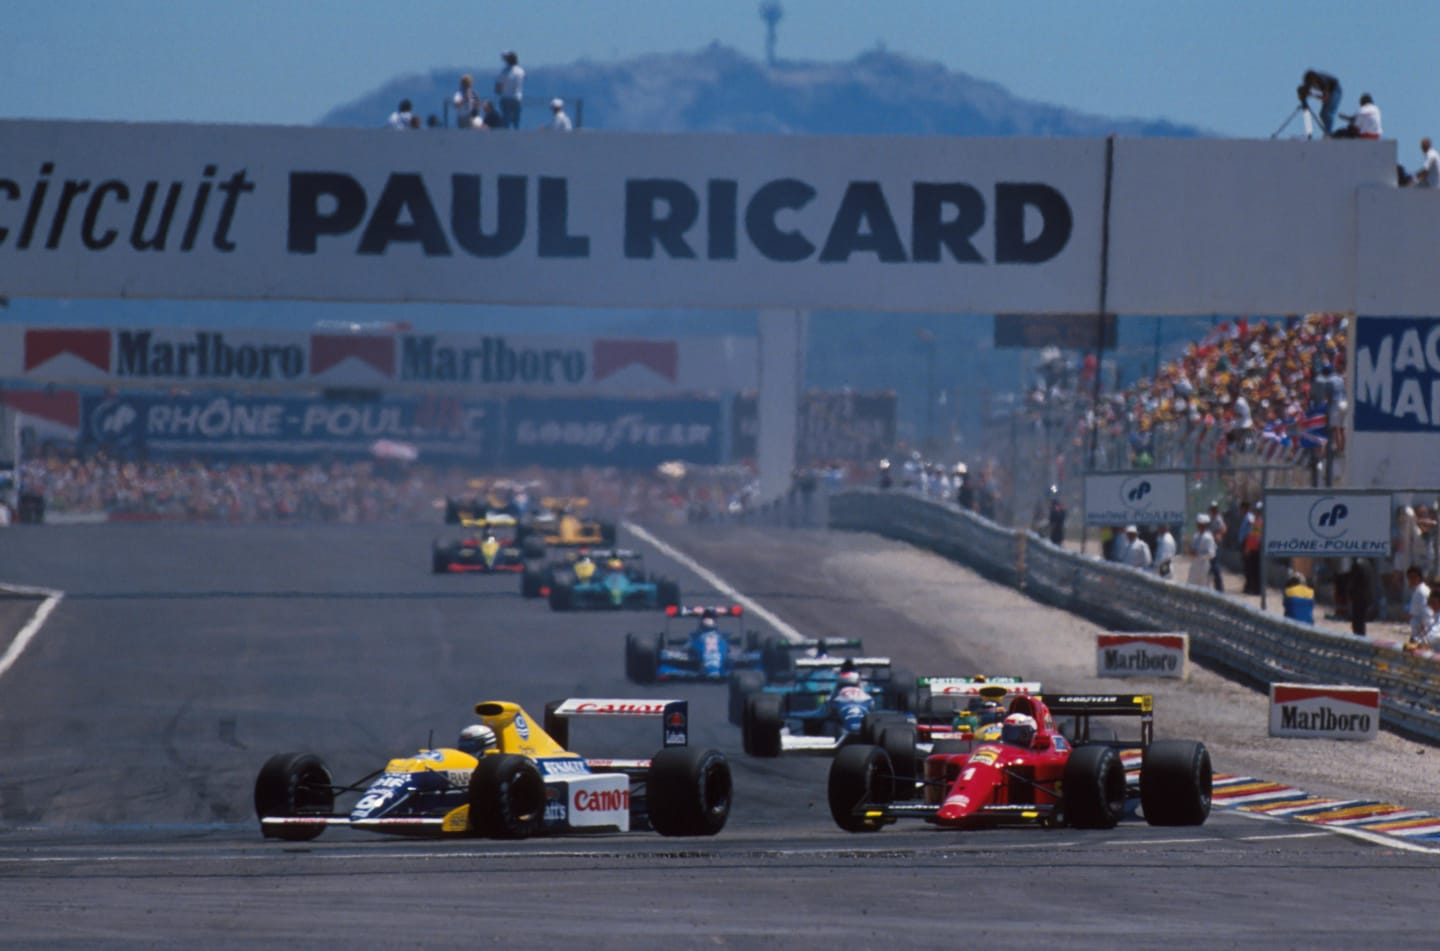 Riccardo Patrese followed by race winner Alain Prost
French GP, Paul Ricard, France, 8 July